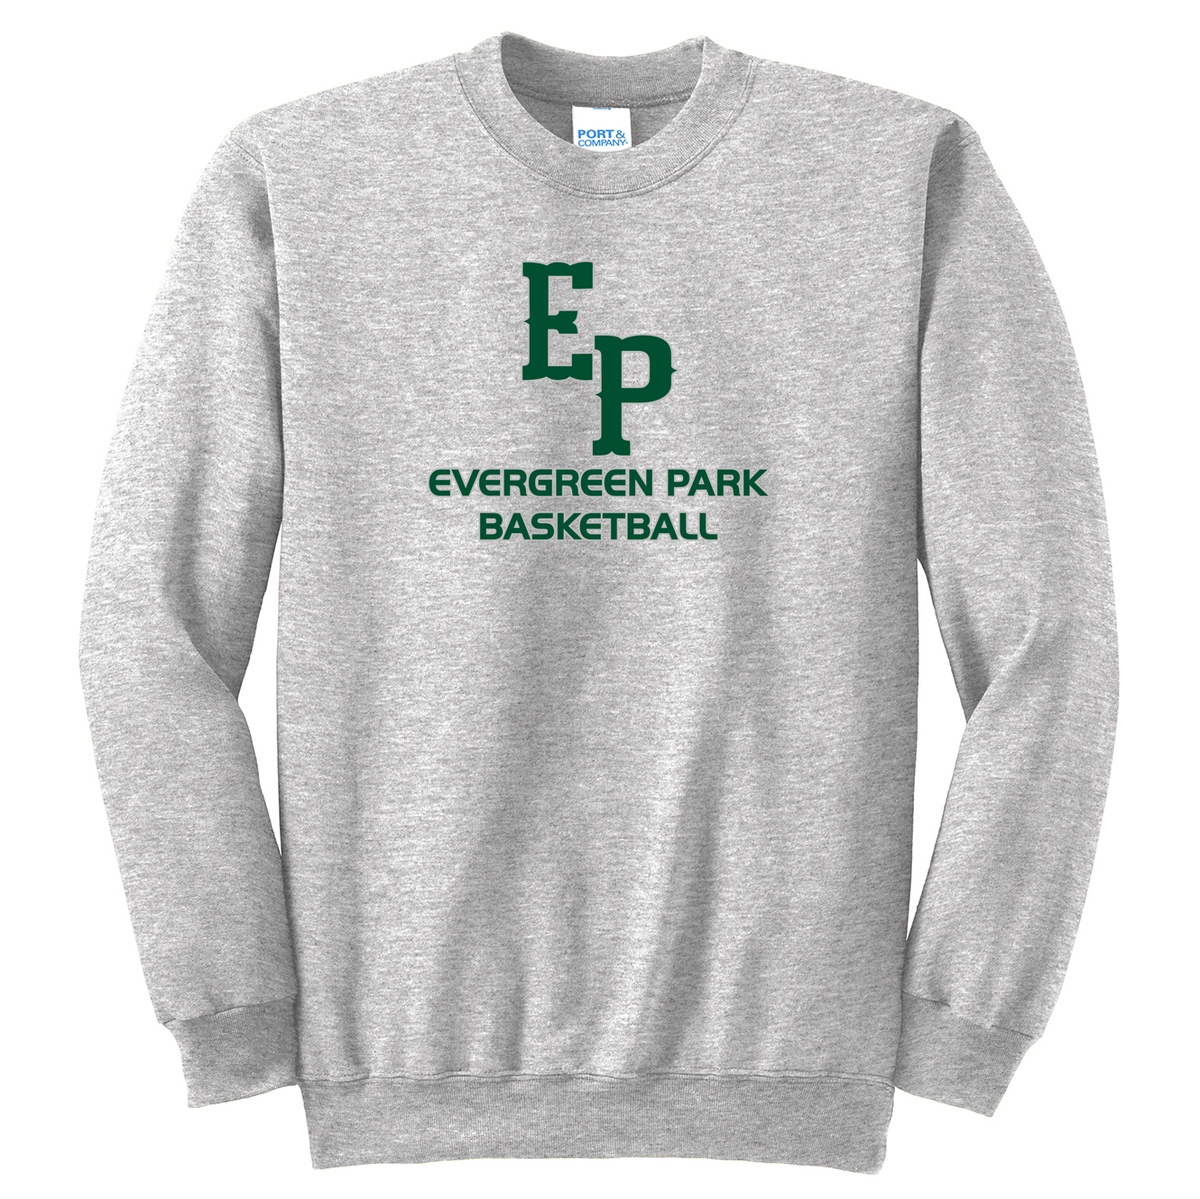 Evergreen Park Basketball Crew Neck Sweater